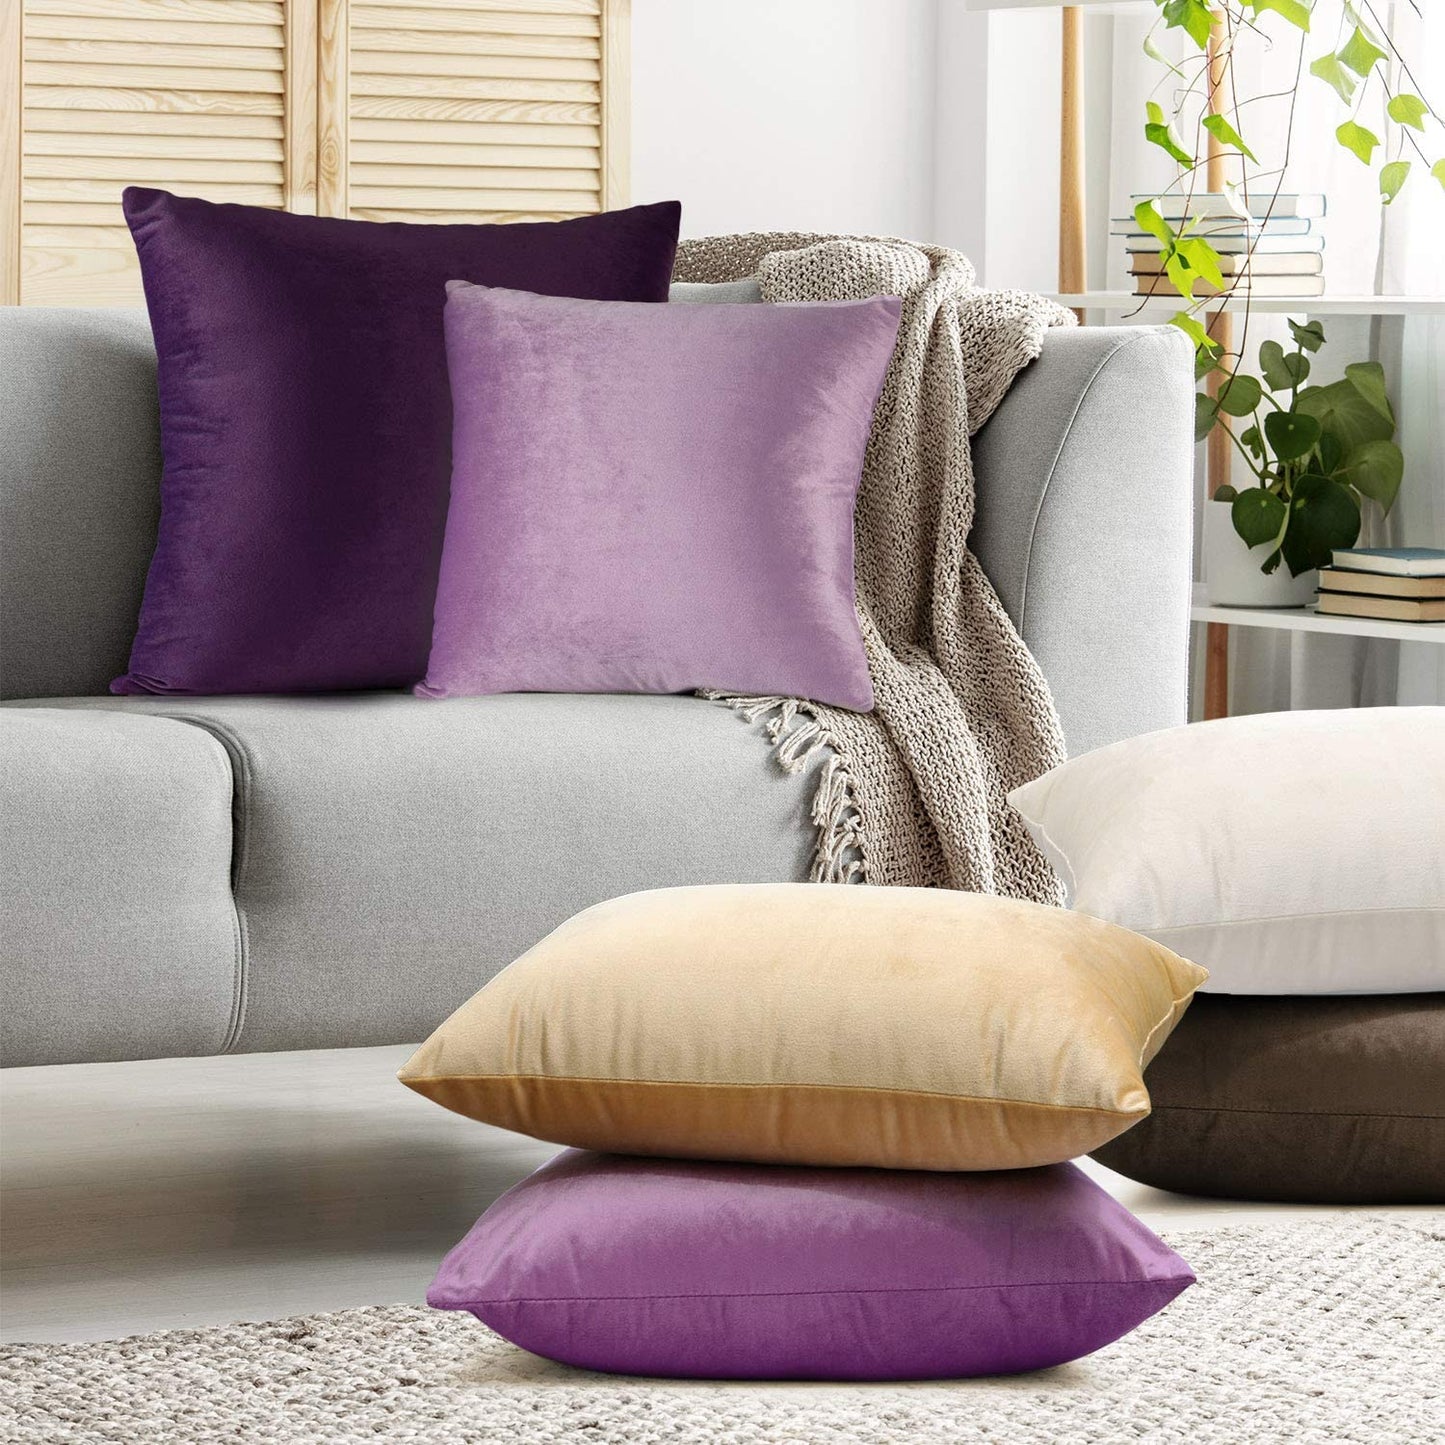 Plain Velvet Cushion 16 x 16 inches - Lavender Dream